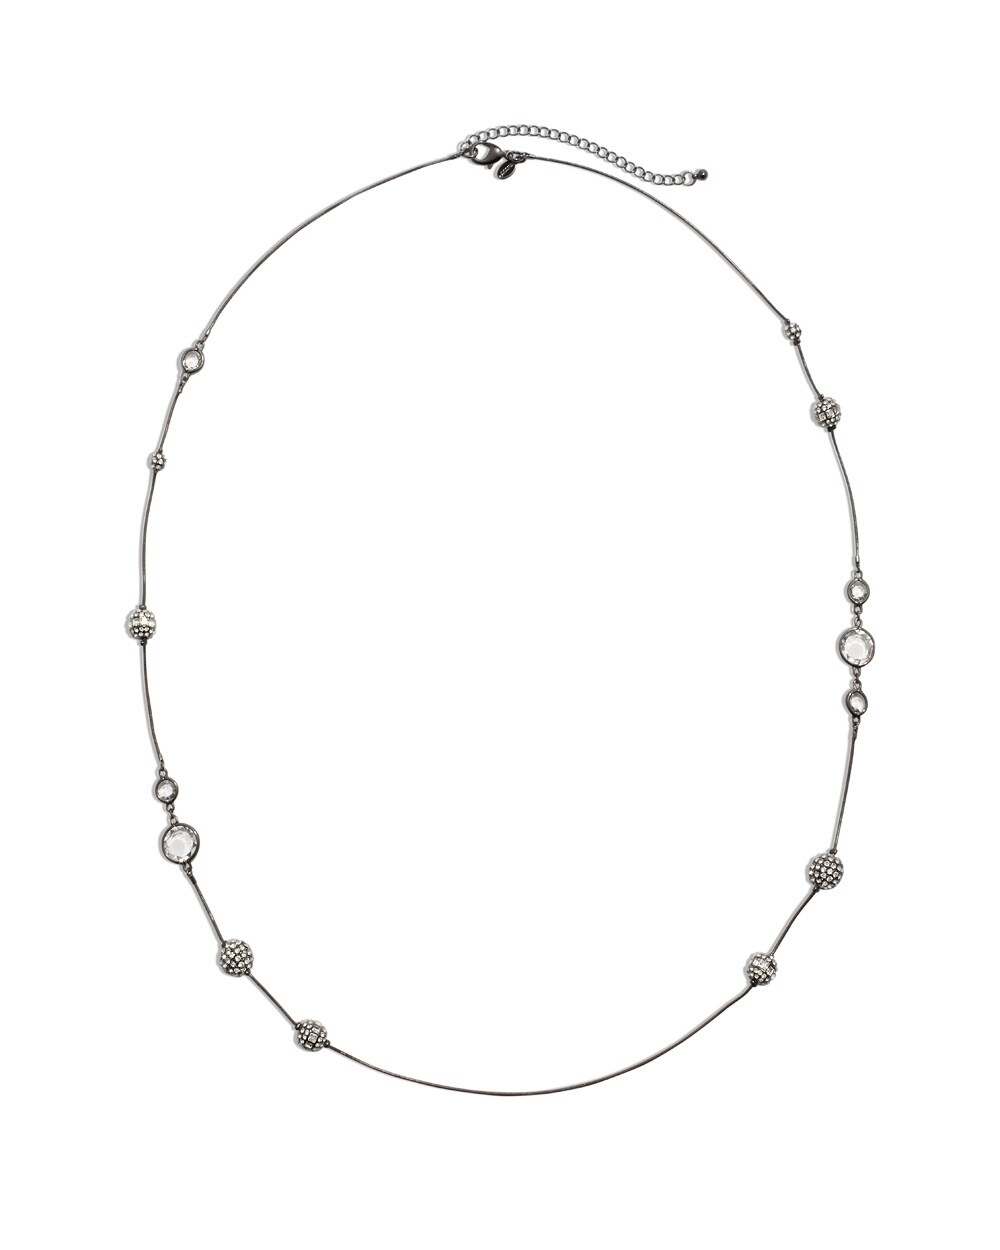 Brille Long Hematite Necklace